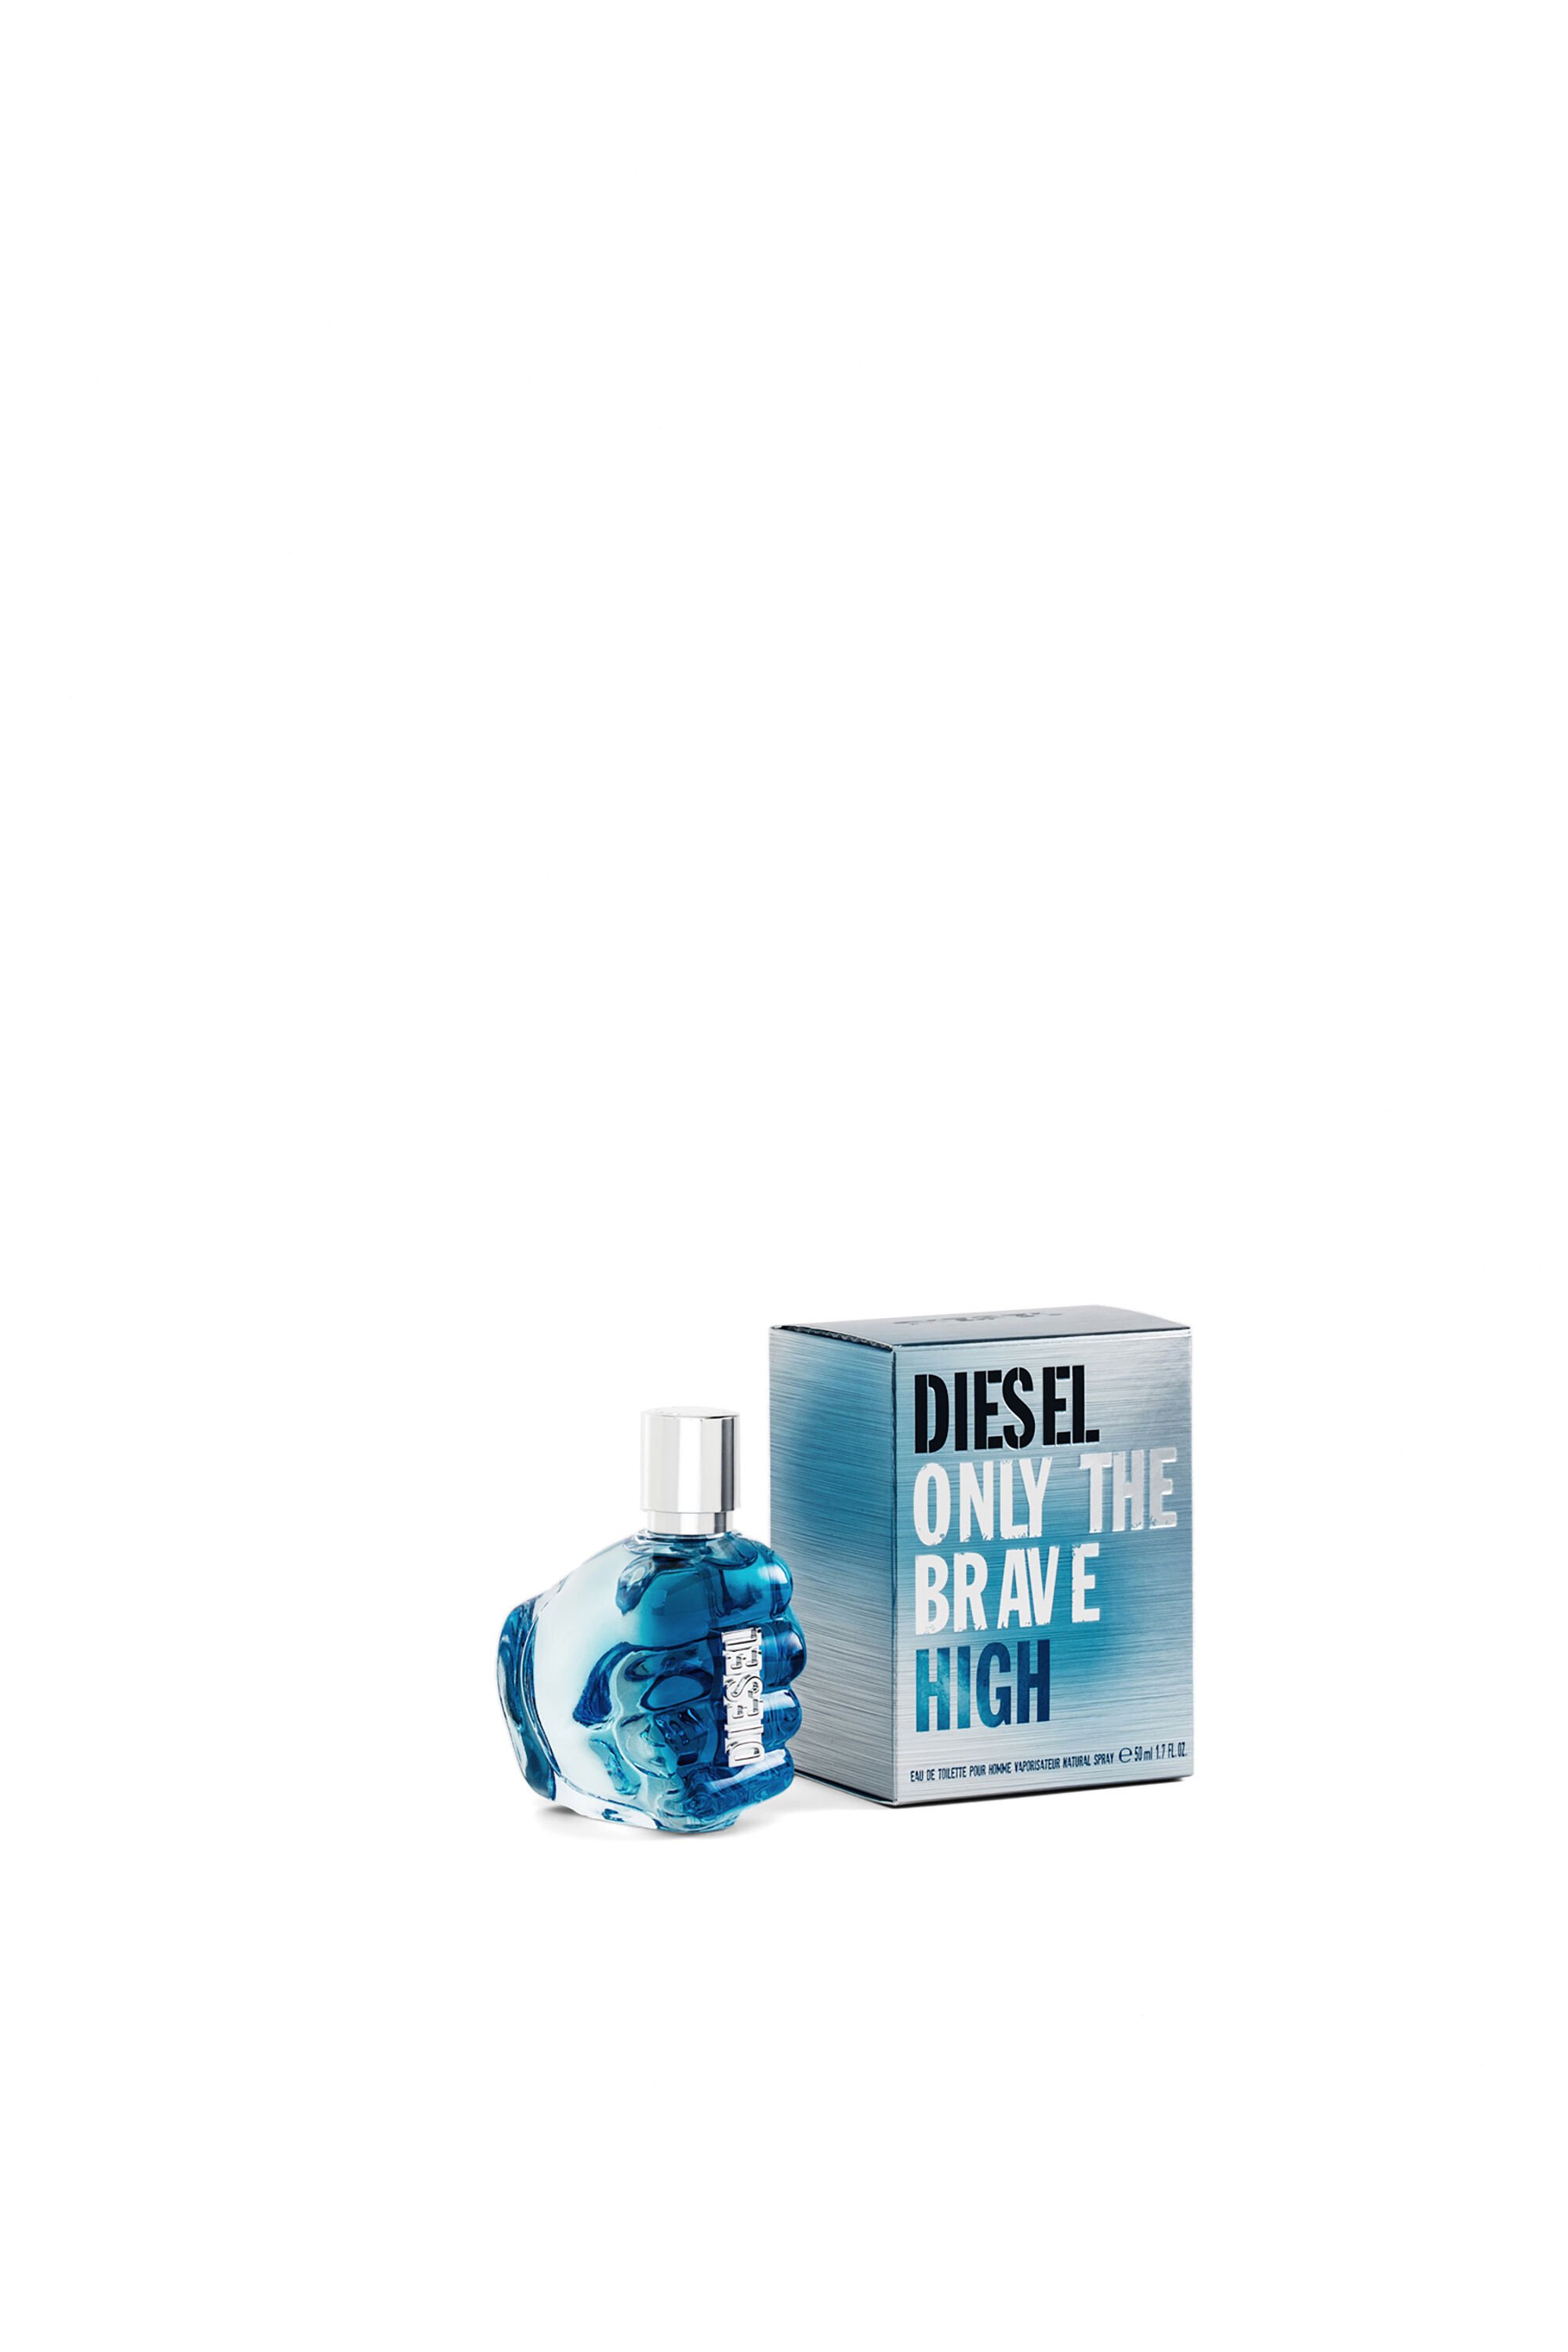 Diesel - ONLY THE BRAVE HIGH  50ML, Light Blue - Image 1